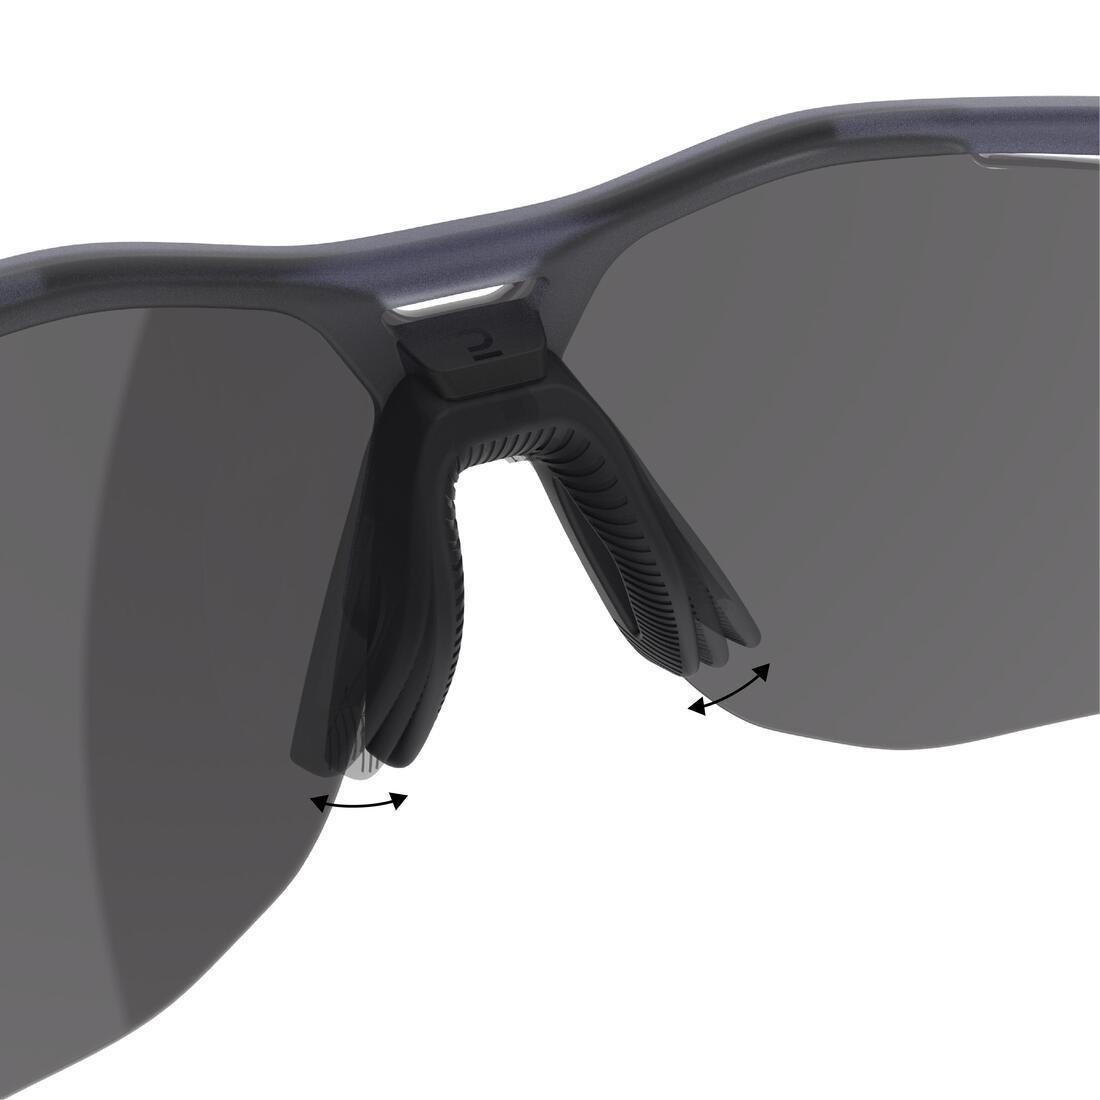 KALENJI - Unisex Runperf 2 Translu Running Sunglasses Category 3, Grey